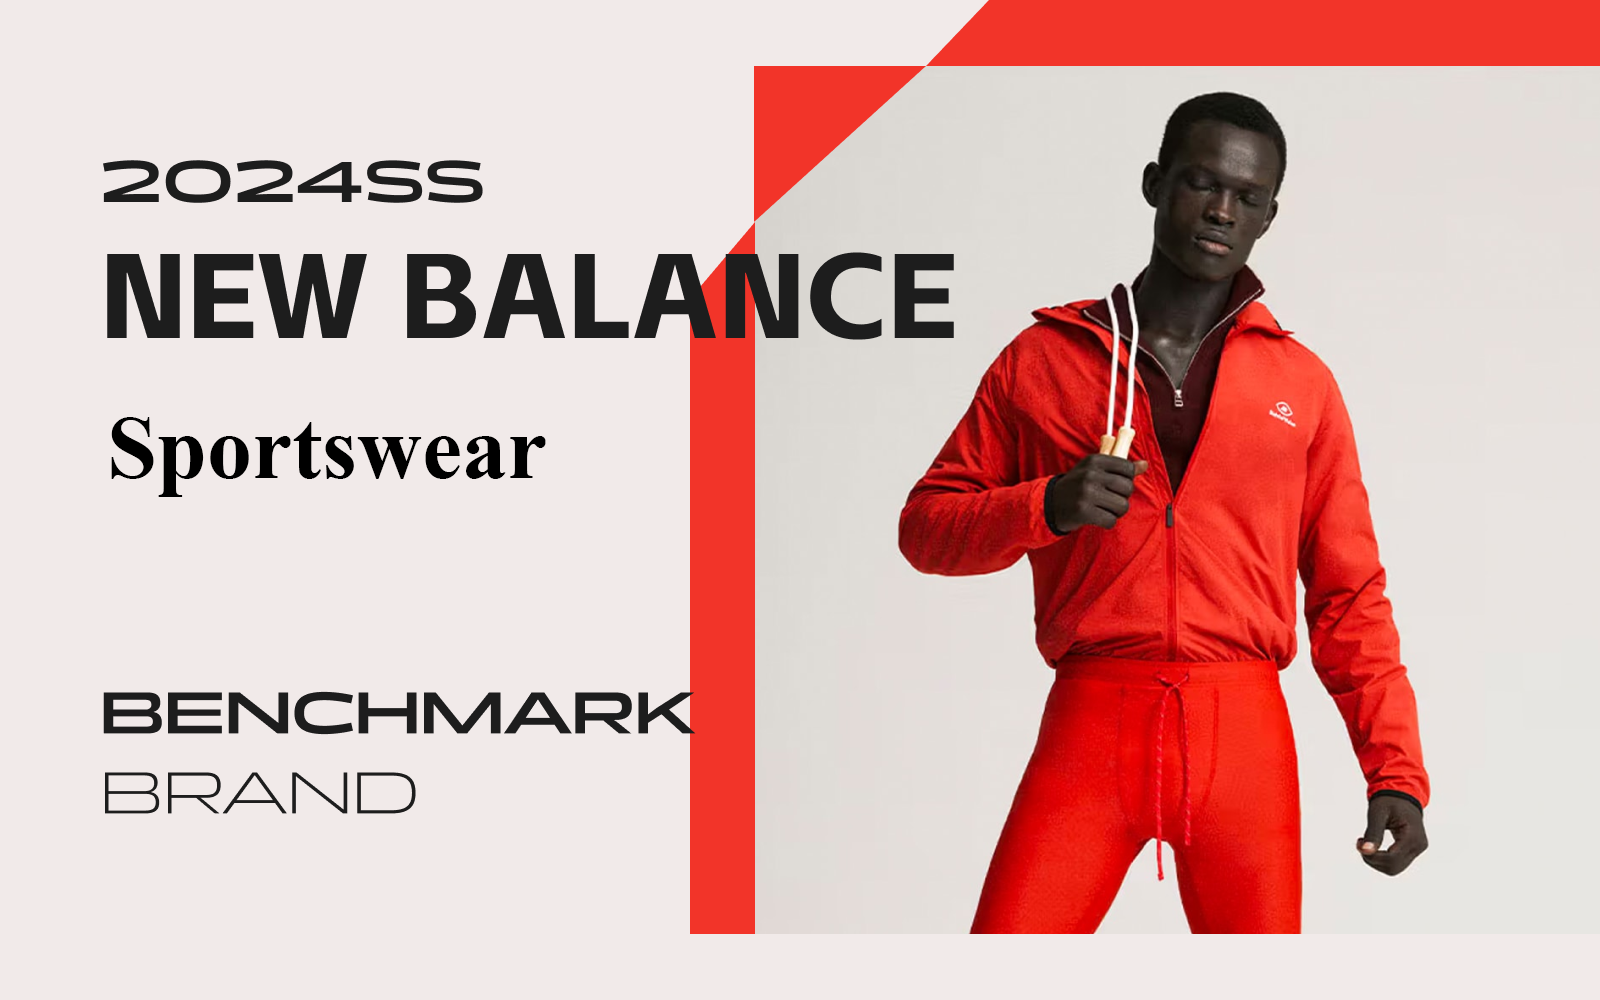 The Analysis of NEW BALANCE Sports Benchmark Brand